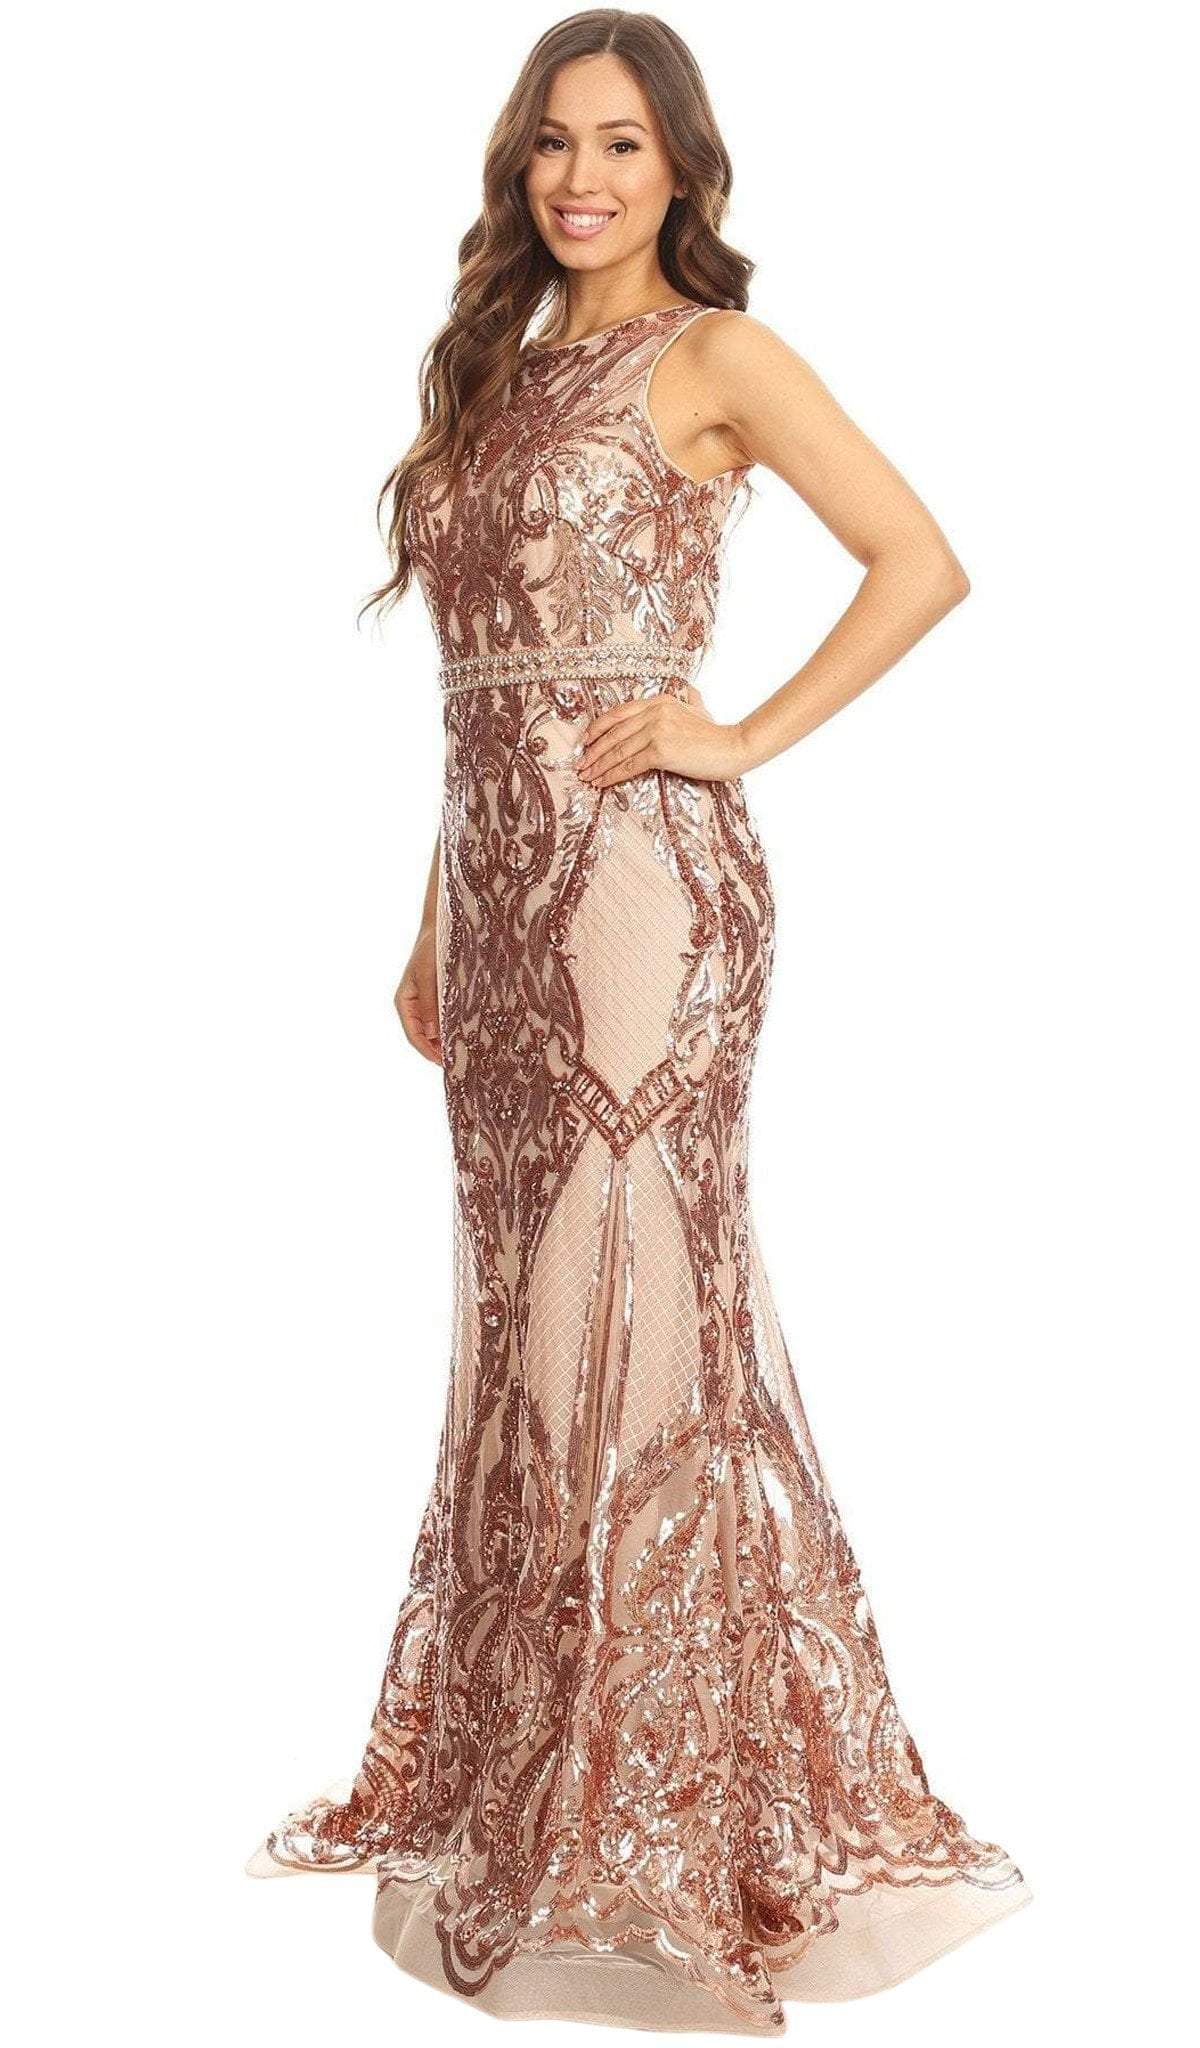 Eureka Fashion - 7335 Sequined Mesh Bateau Mermaid Dress
